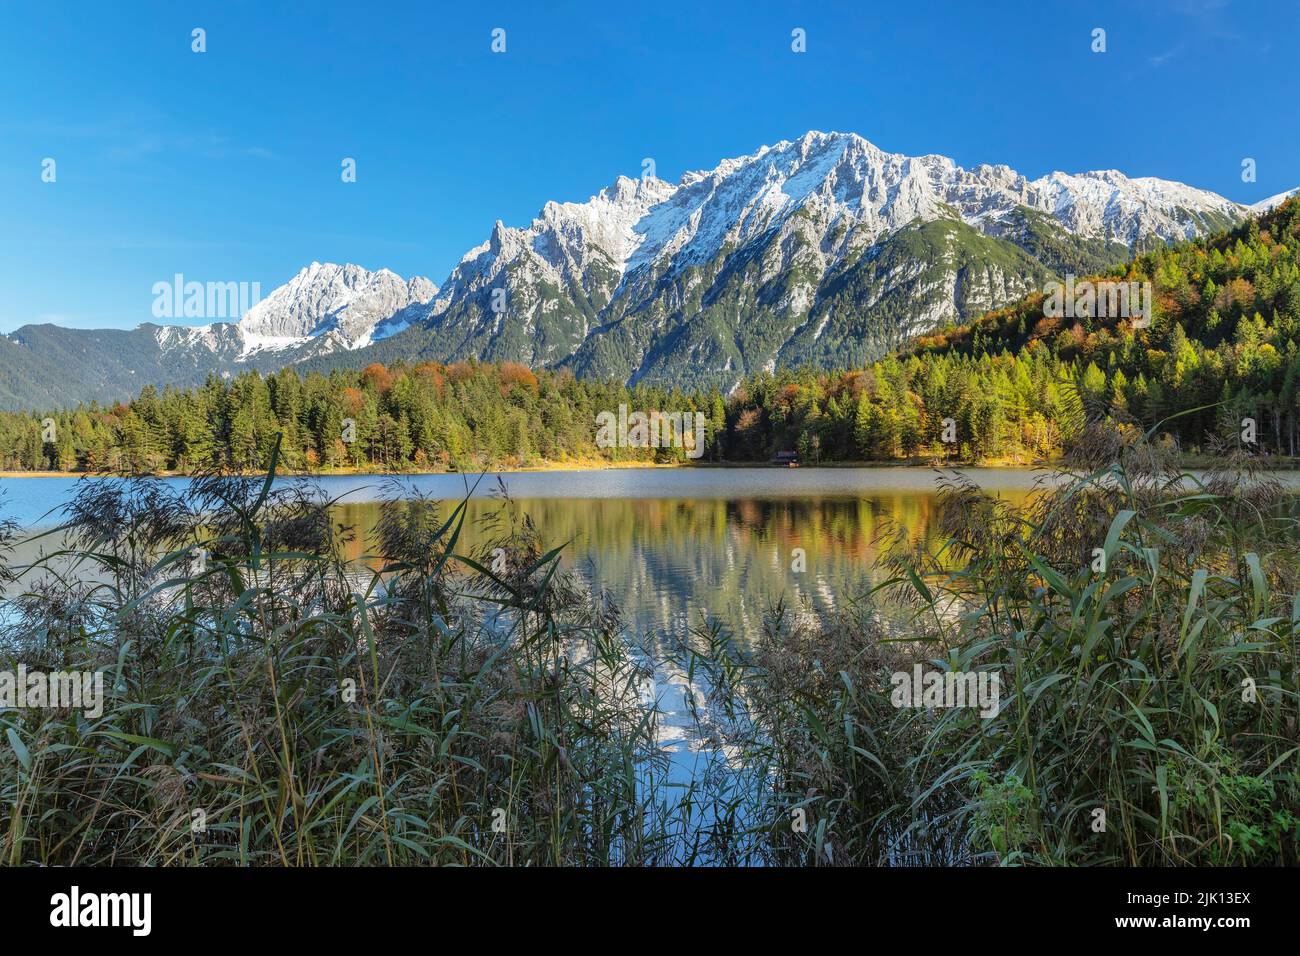 Karwendel mountain range reflecting in Ferchensee Lake, Werdenfelser Land, Upper Bavaria, Germany, Europe Stock Photo